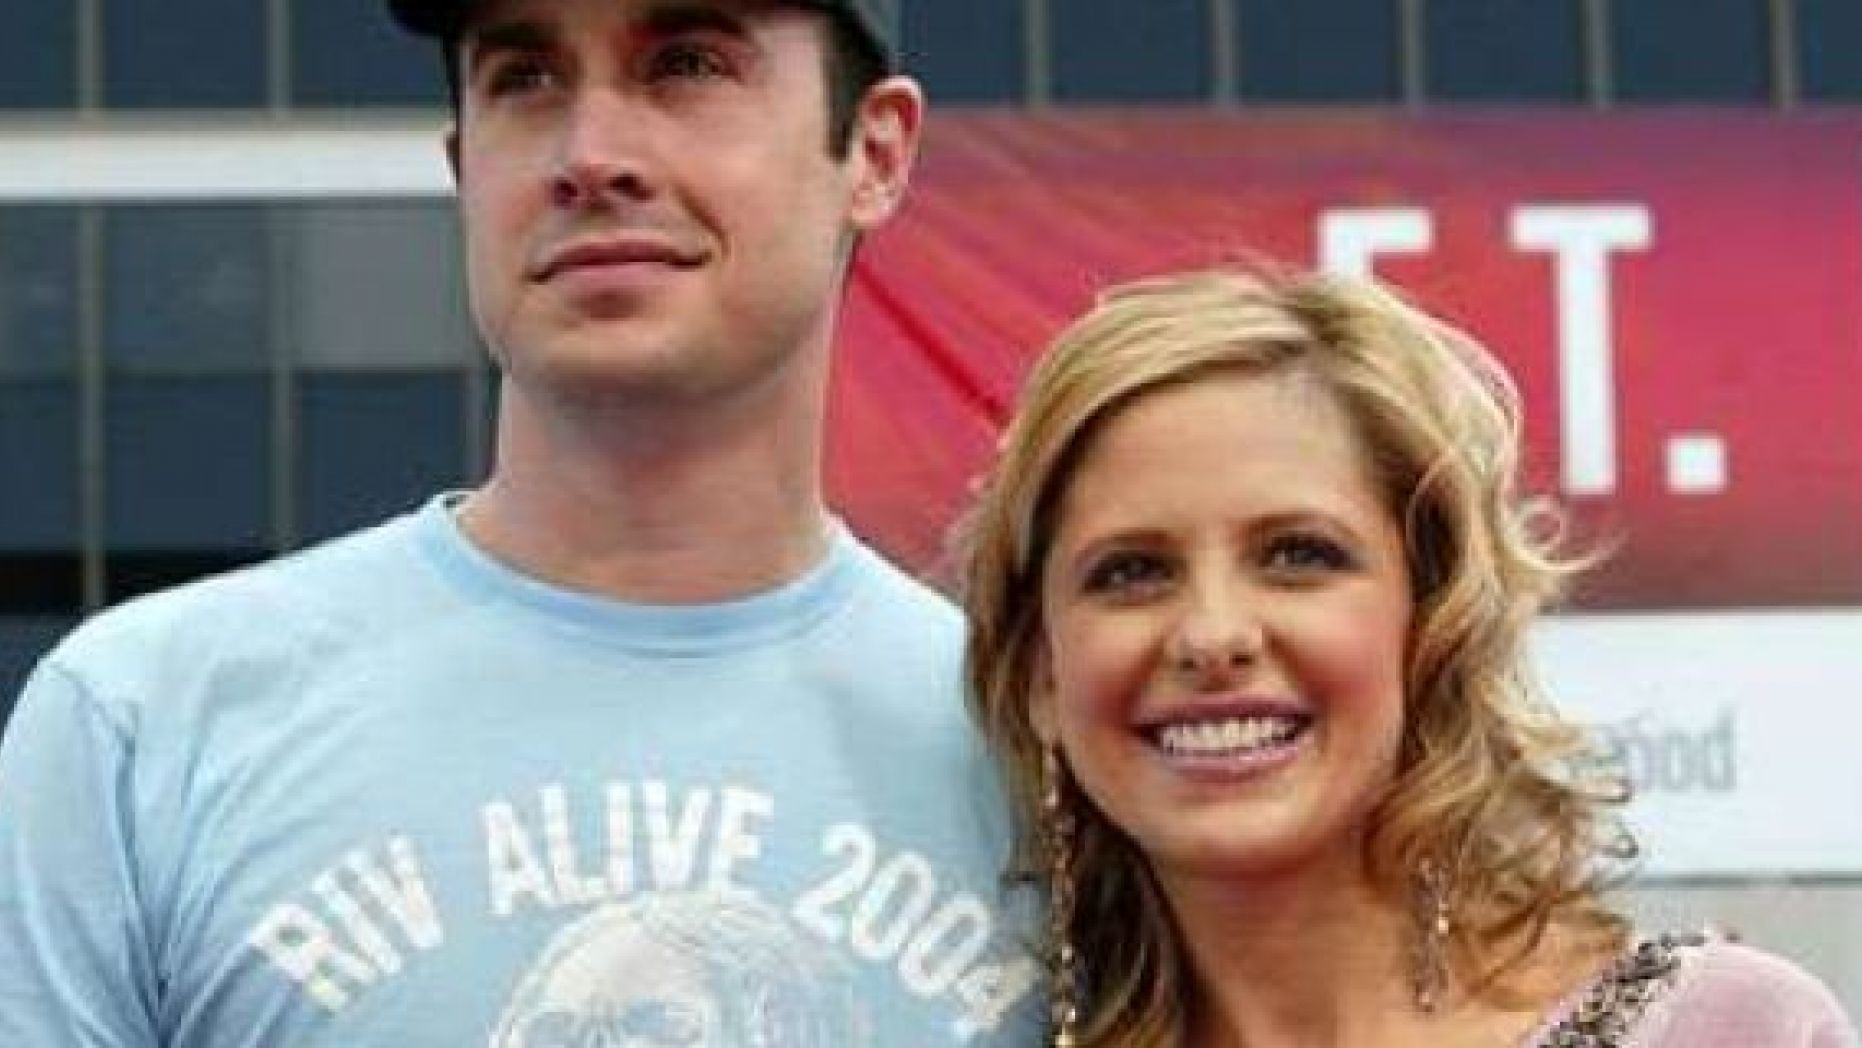 Freddie Prinze Jr. and Sarah Michelle Geller tied the knot in 2002.